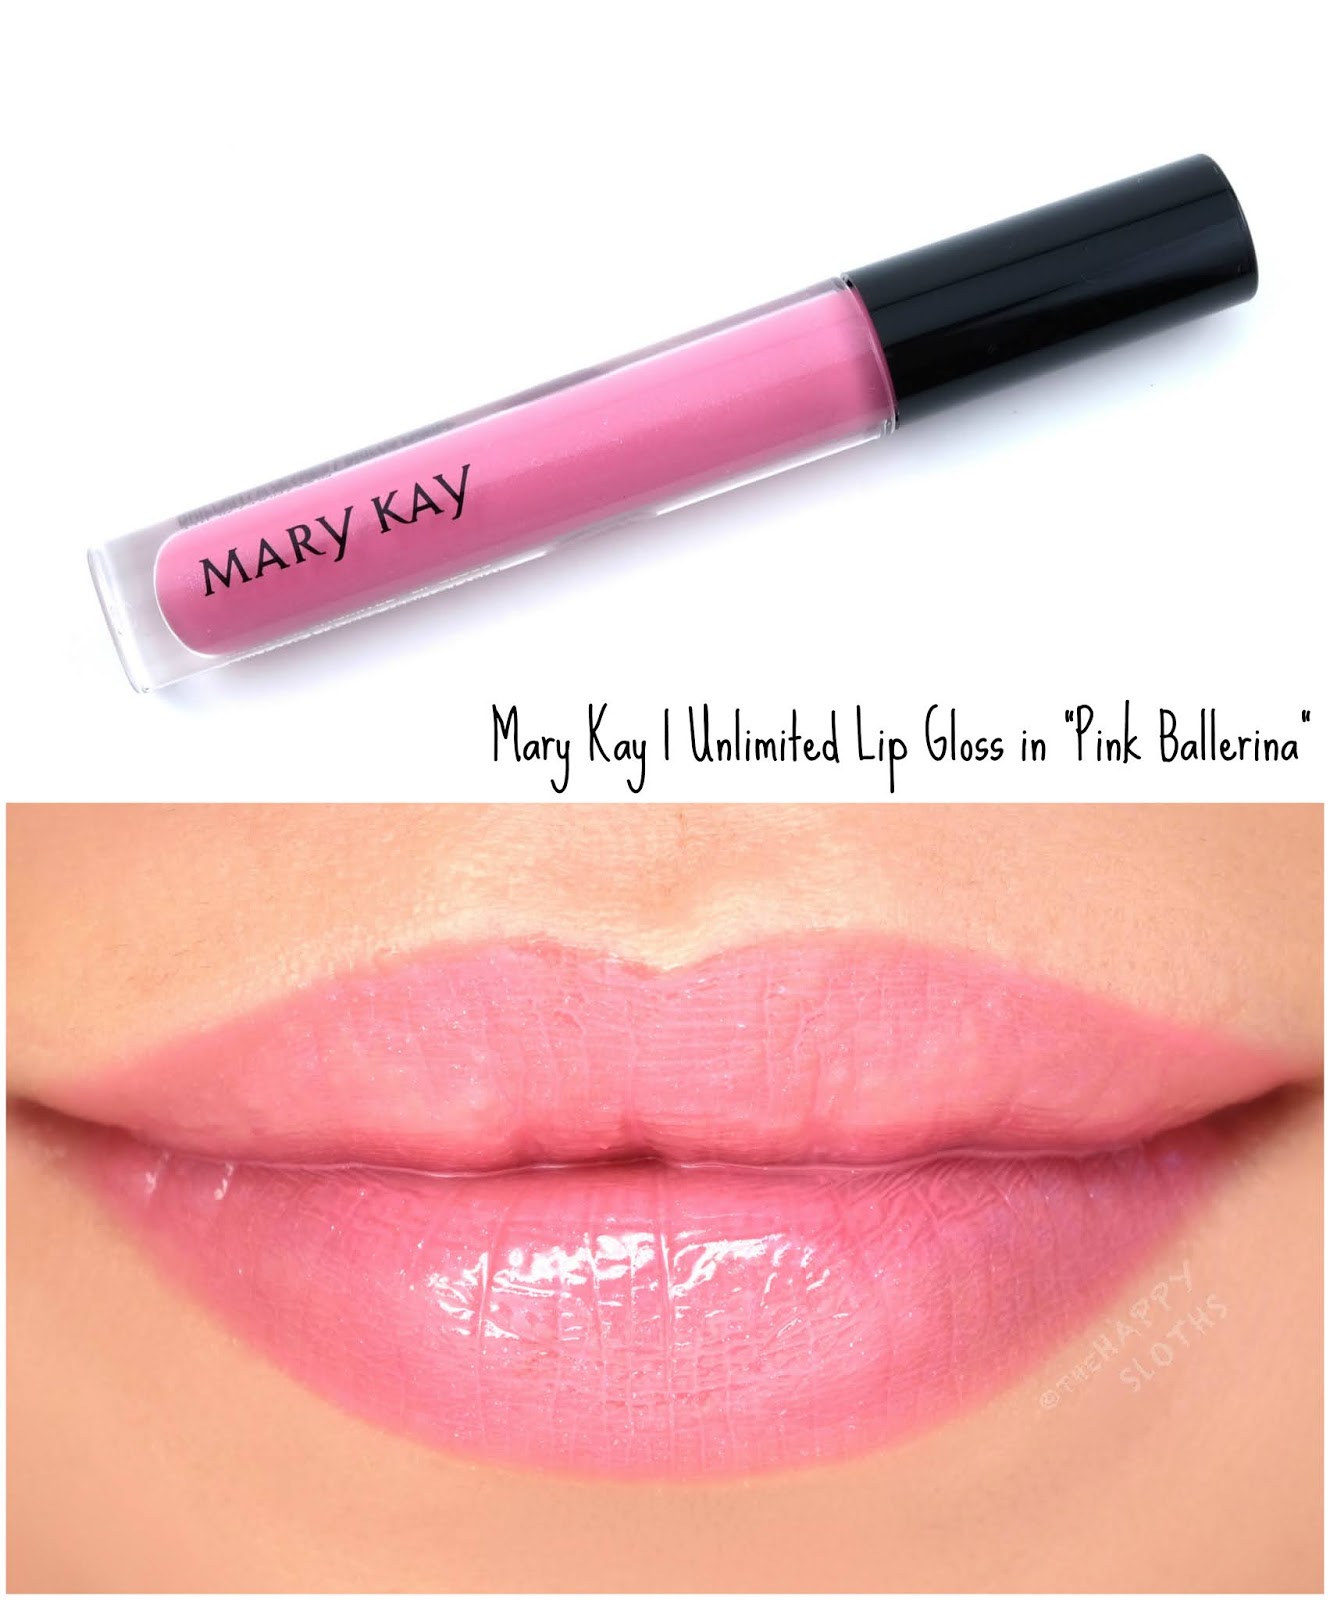 Sheer Illusion Shimmer Unlimited Lip Gloss - Mary Kay on eBid Canada